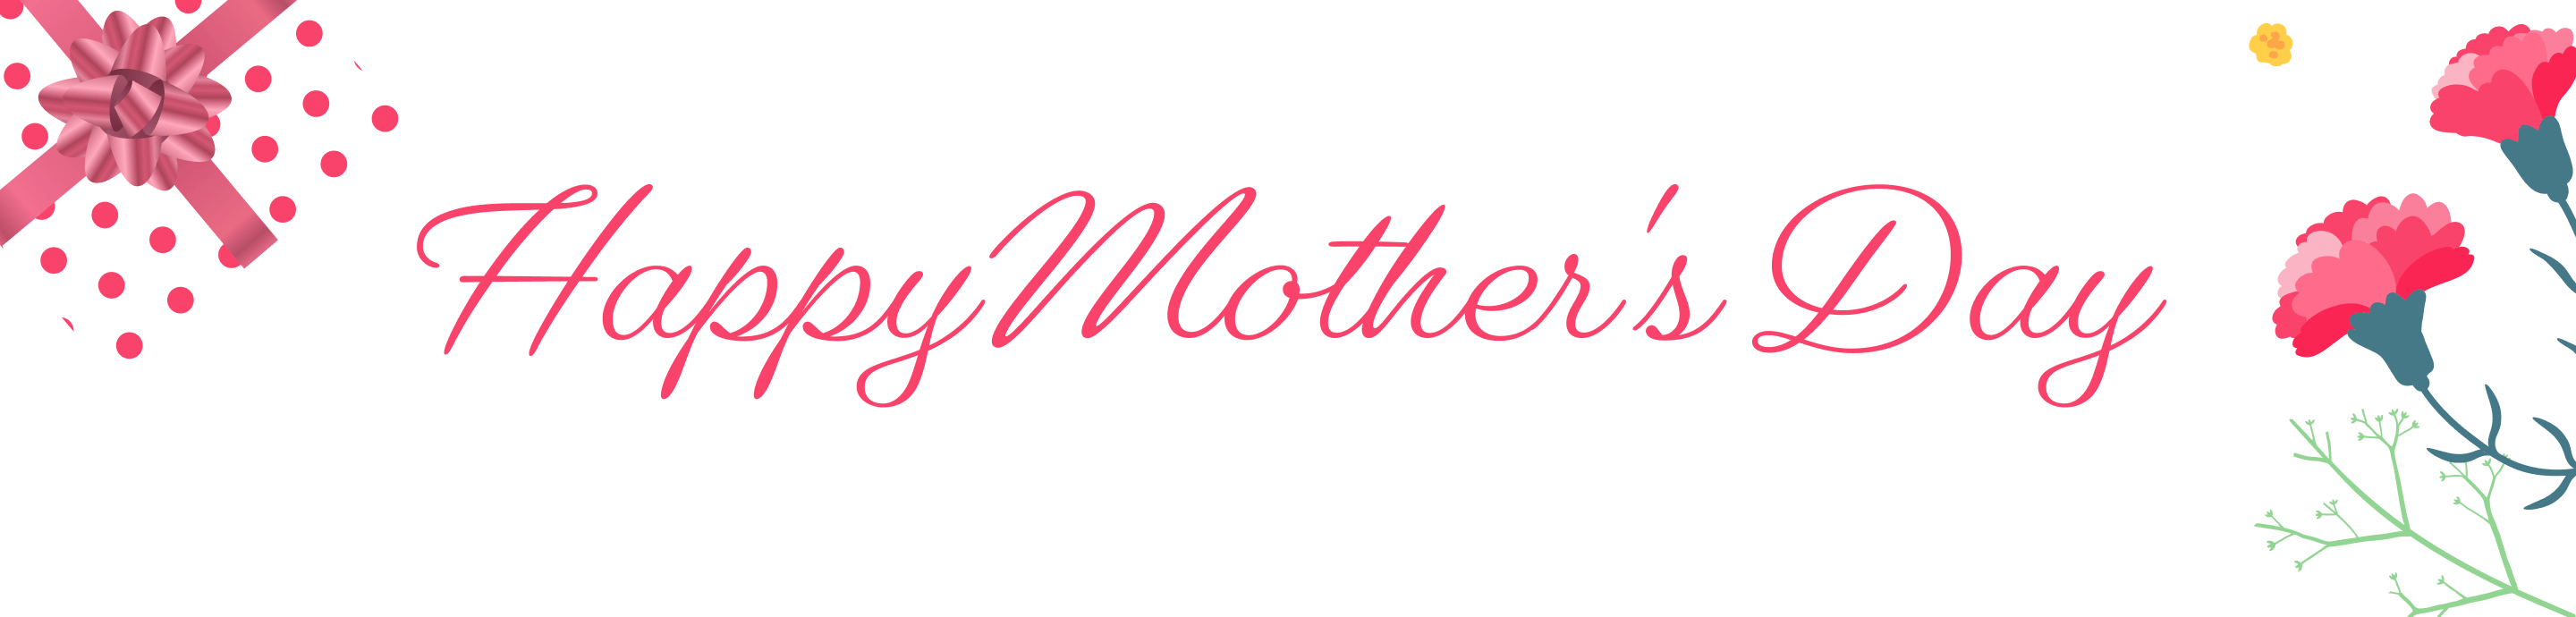 Happy mother's day 母の日ギフトはGOHOBIのフルーツゼリー